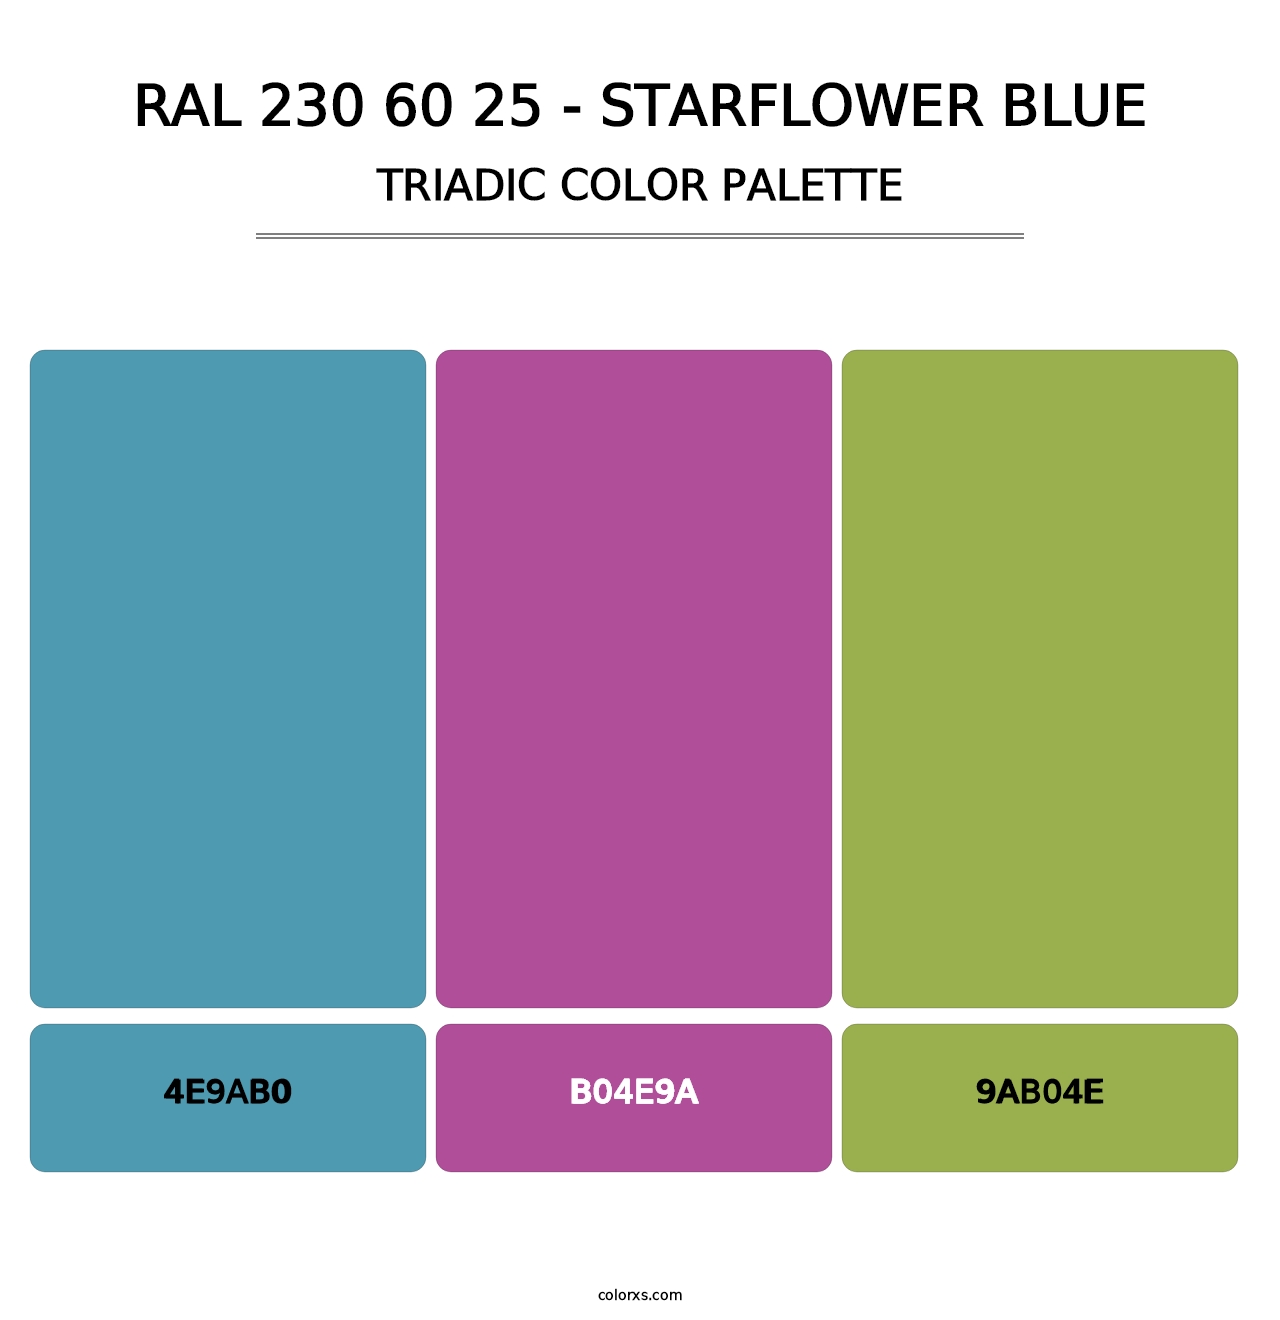 RAL 230 60 25 - Starflower Blue - Triadic Color Palette